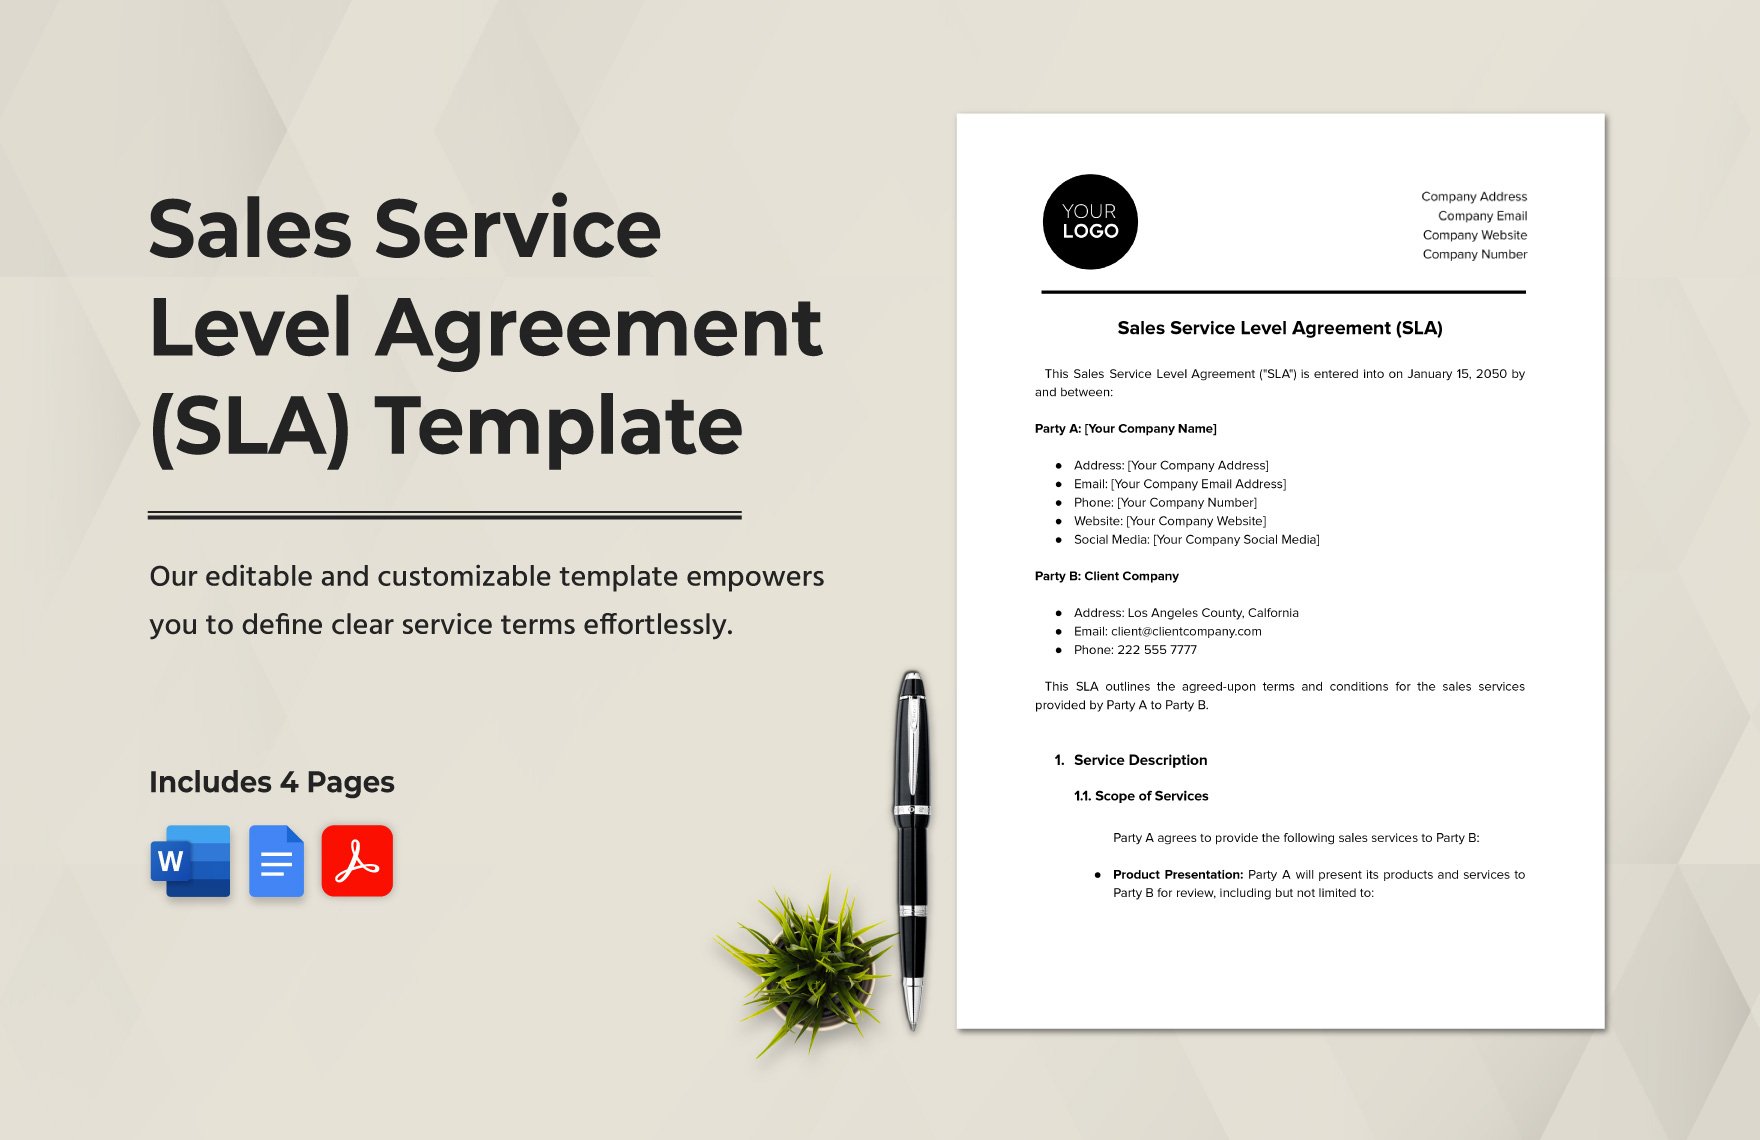 Sales Service Level Agreement (SLA) Template in Word, Google Docs, PDF